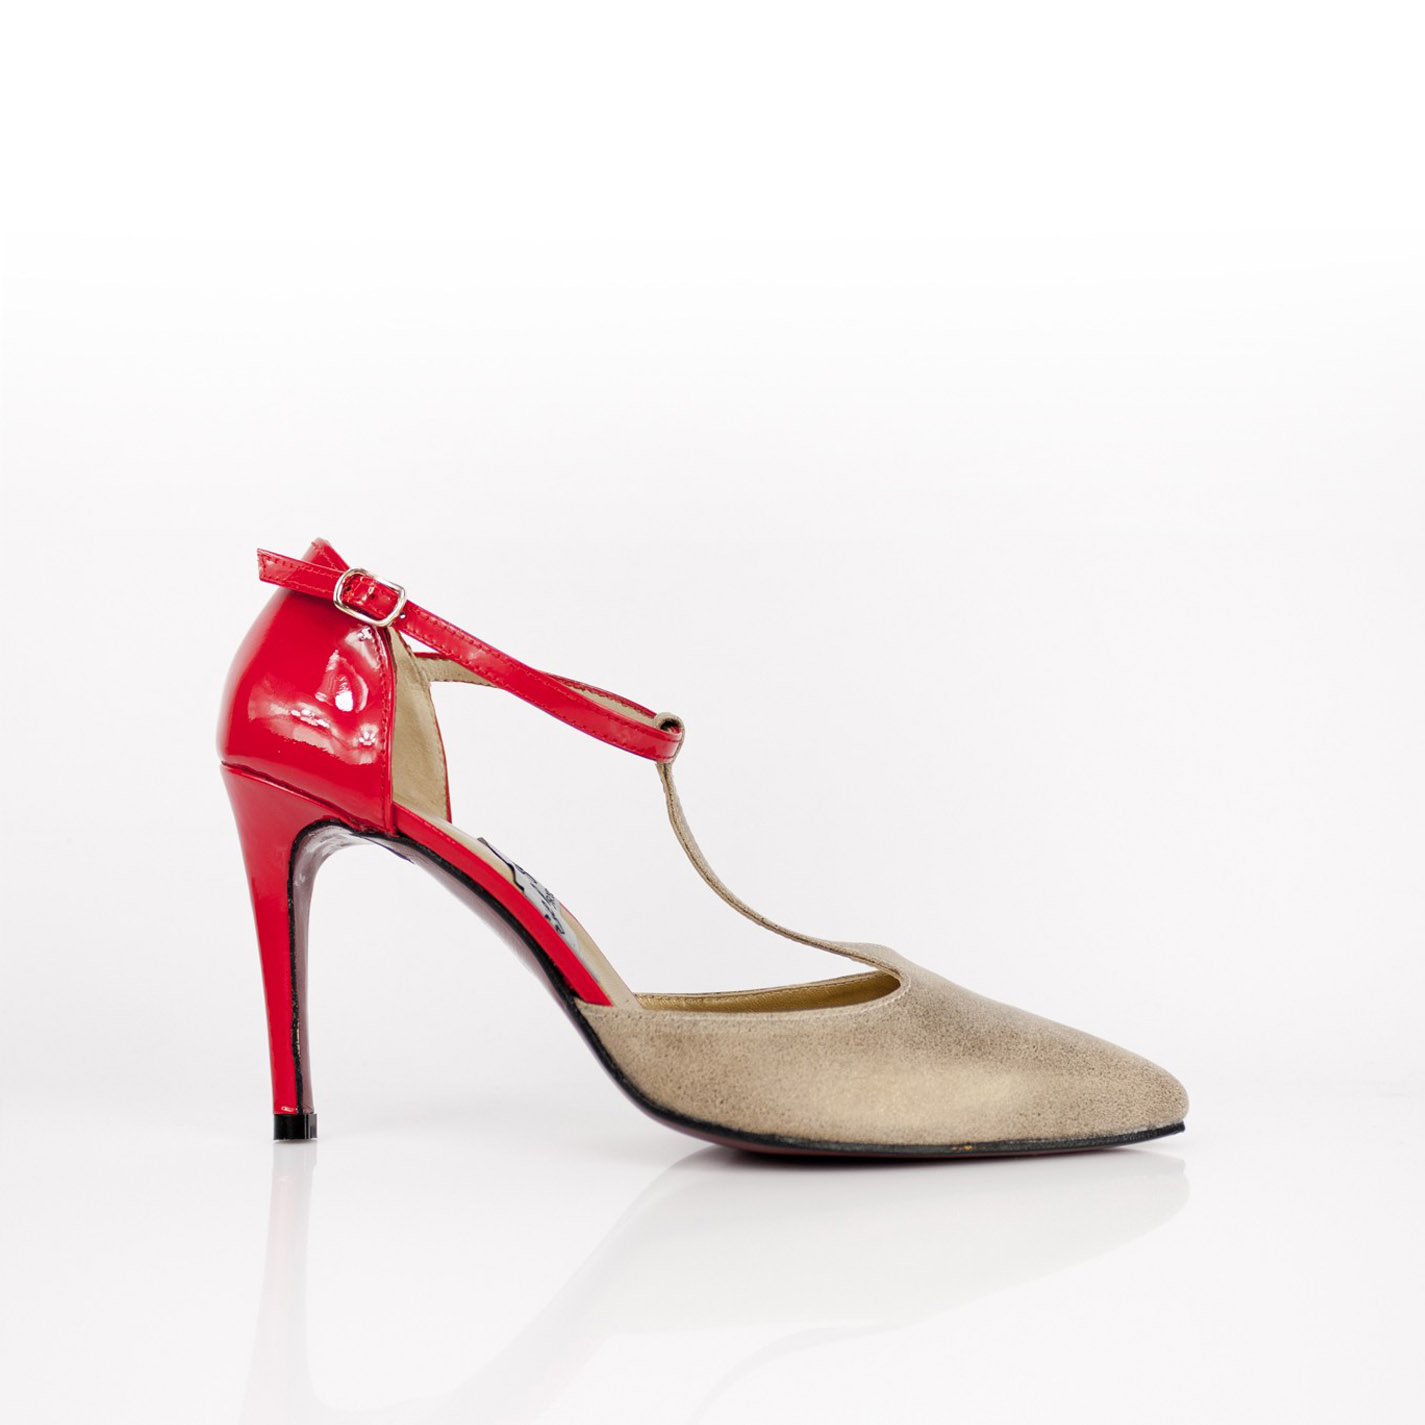 391 - Jorge Larrañaga zapatos mujer rojos charol